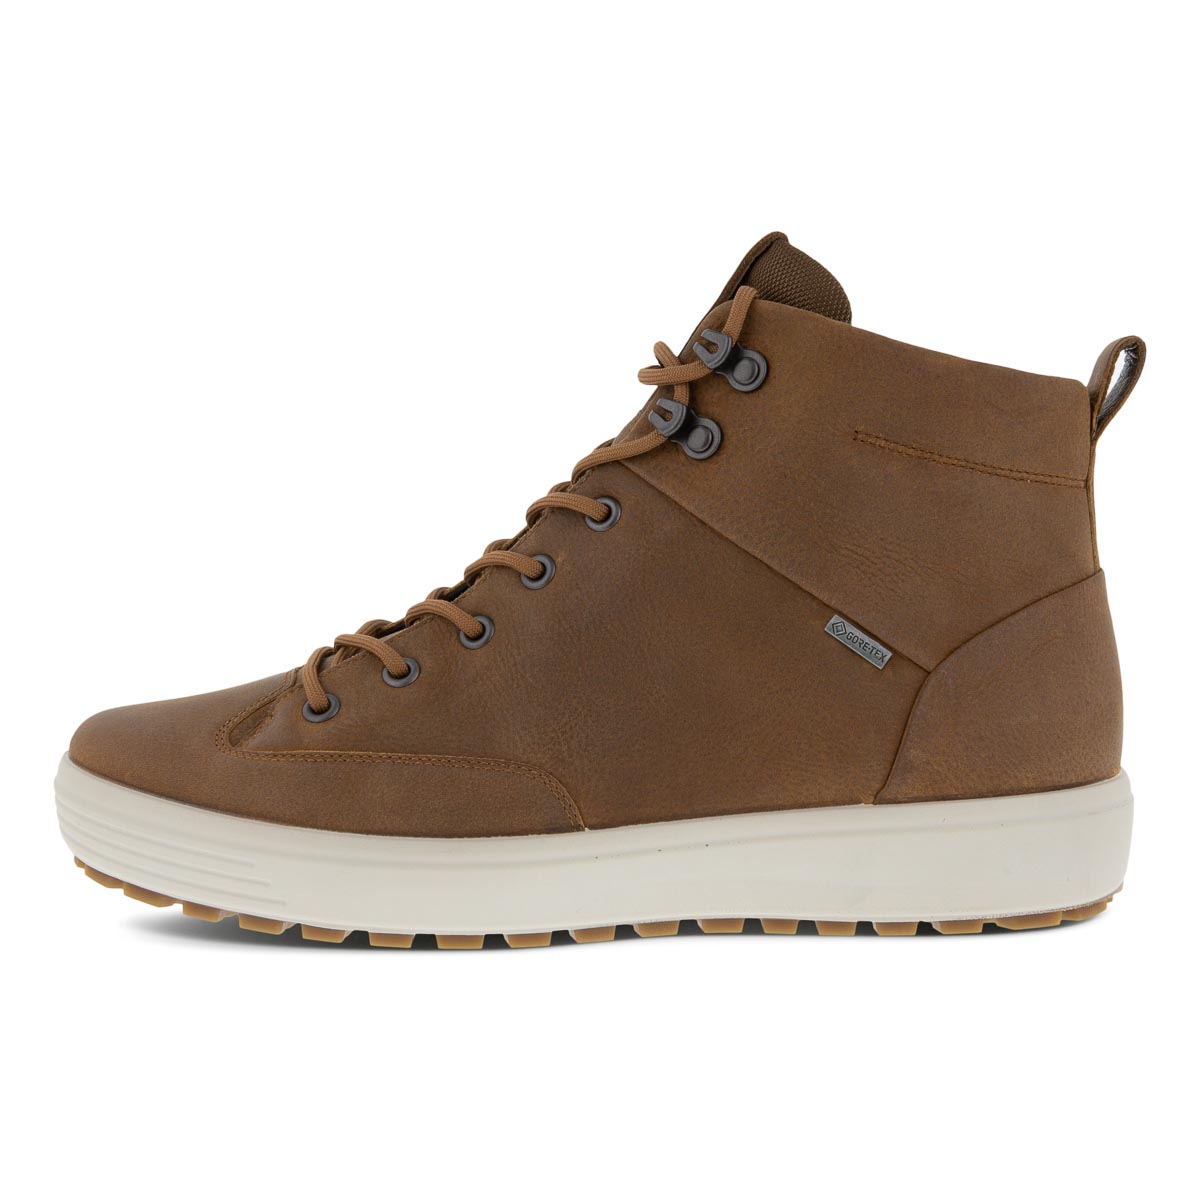 ECCO Soft 7 M Bt Gtx 450114-02034 Tan Leather boots